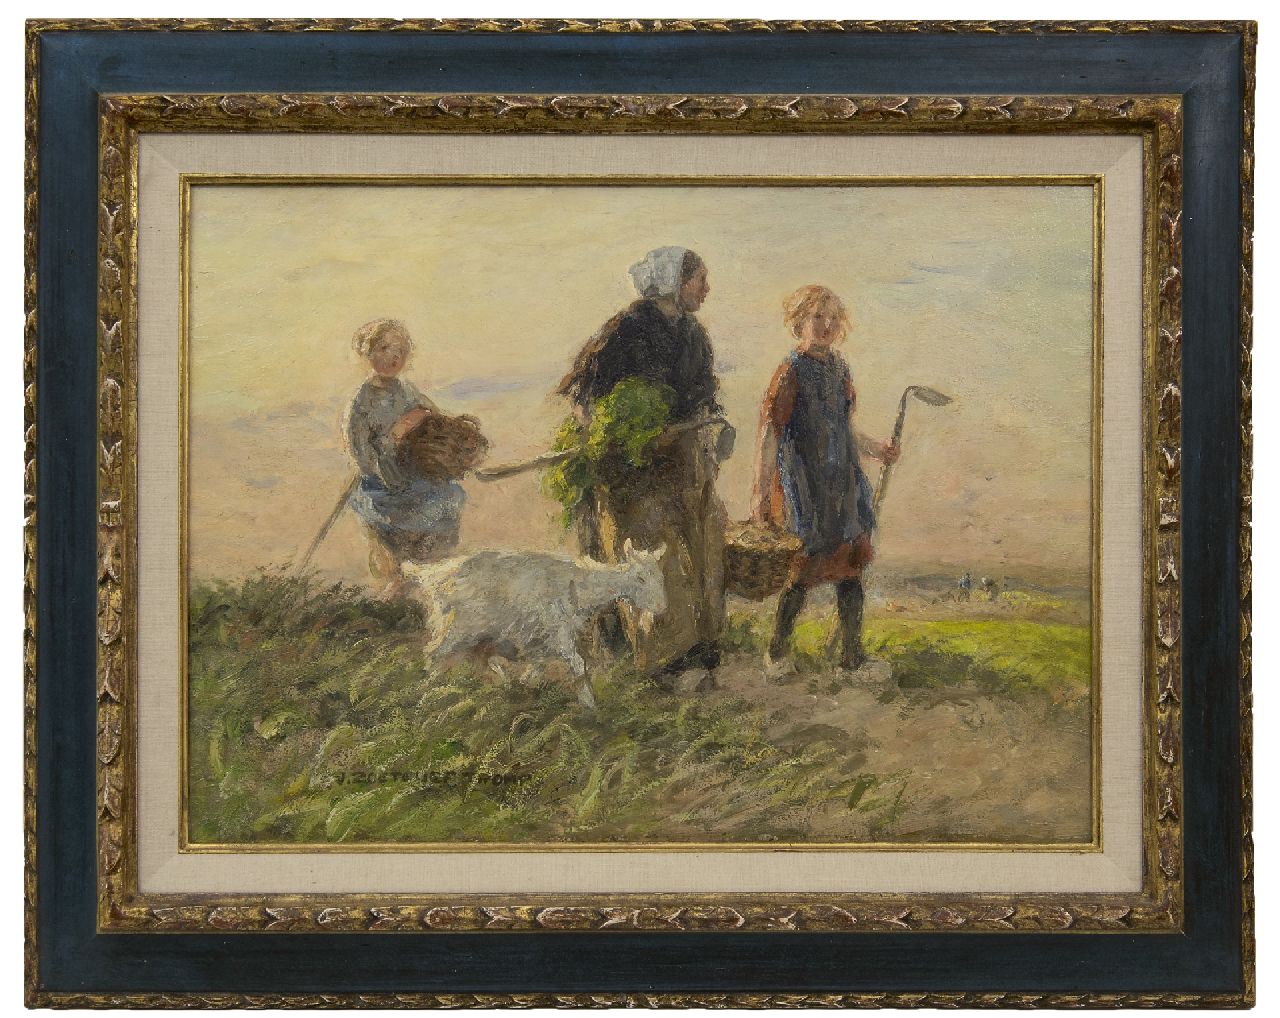 Zoetelief Tromp J.  | Johannes 'Jan' Zoetelief Tromp | Paintings offered for sale | Homeward bound, oil on canvas 40.7 x 56.7 cm, signed l.l.